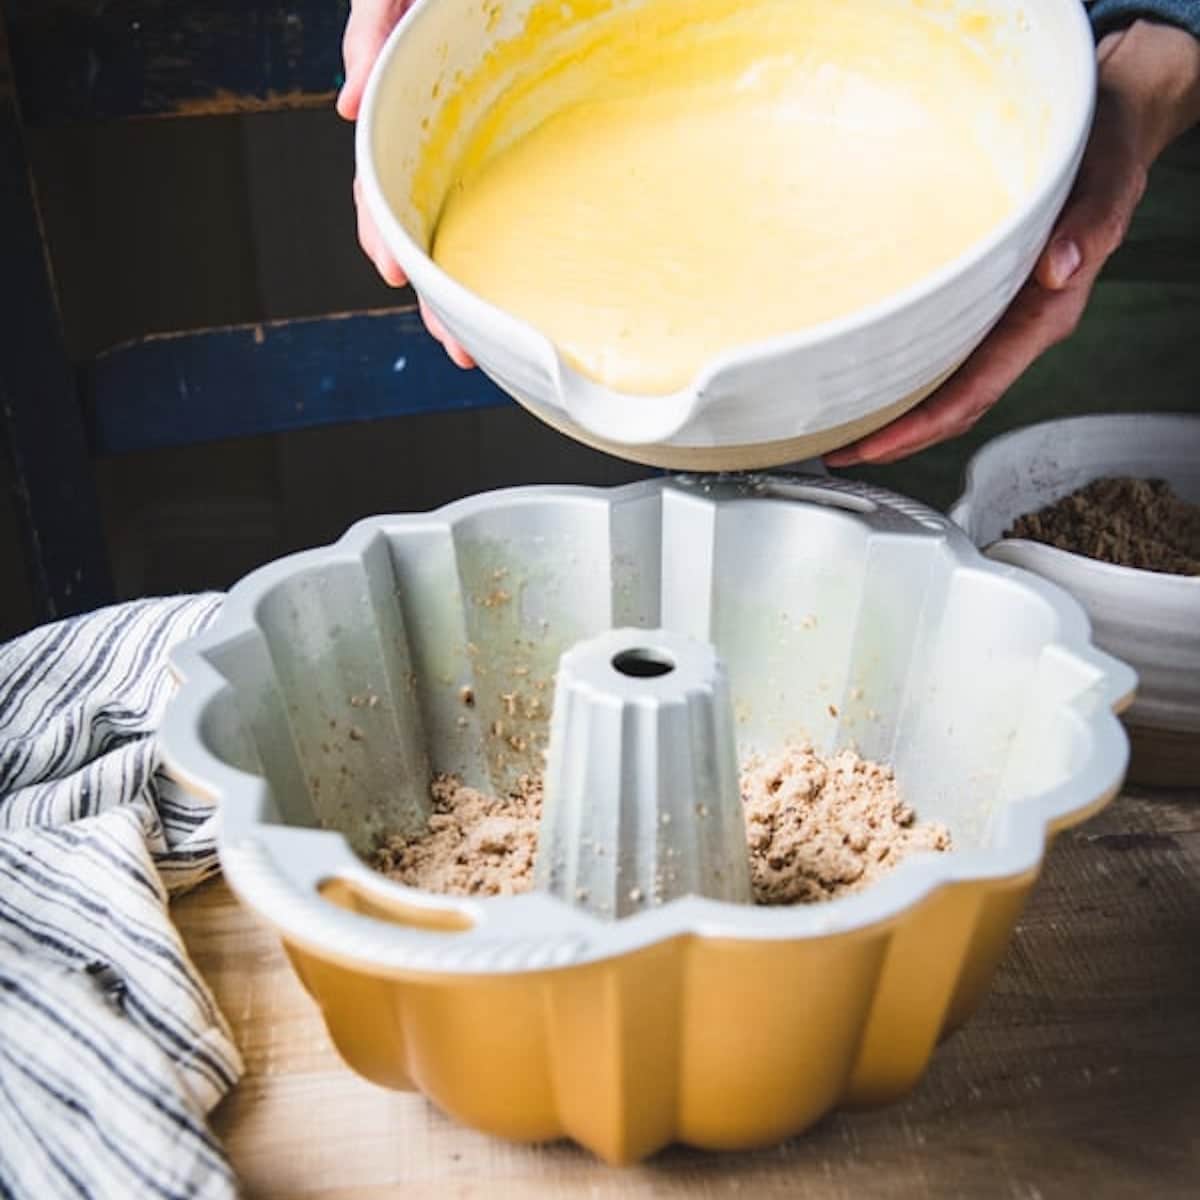 Nordic Ware Non-Stick Round Bundt Charms Cake Pan